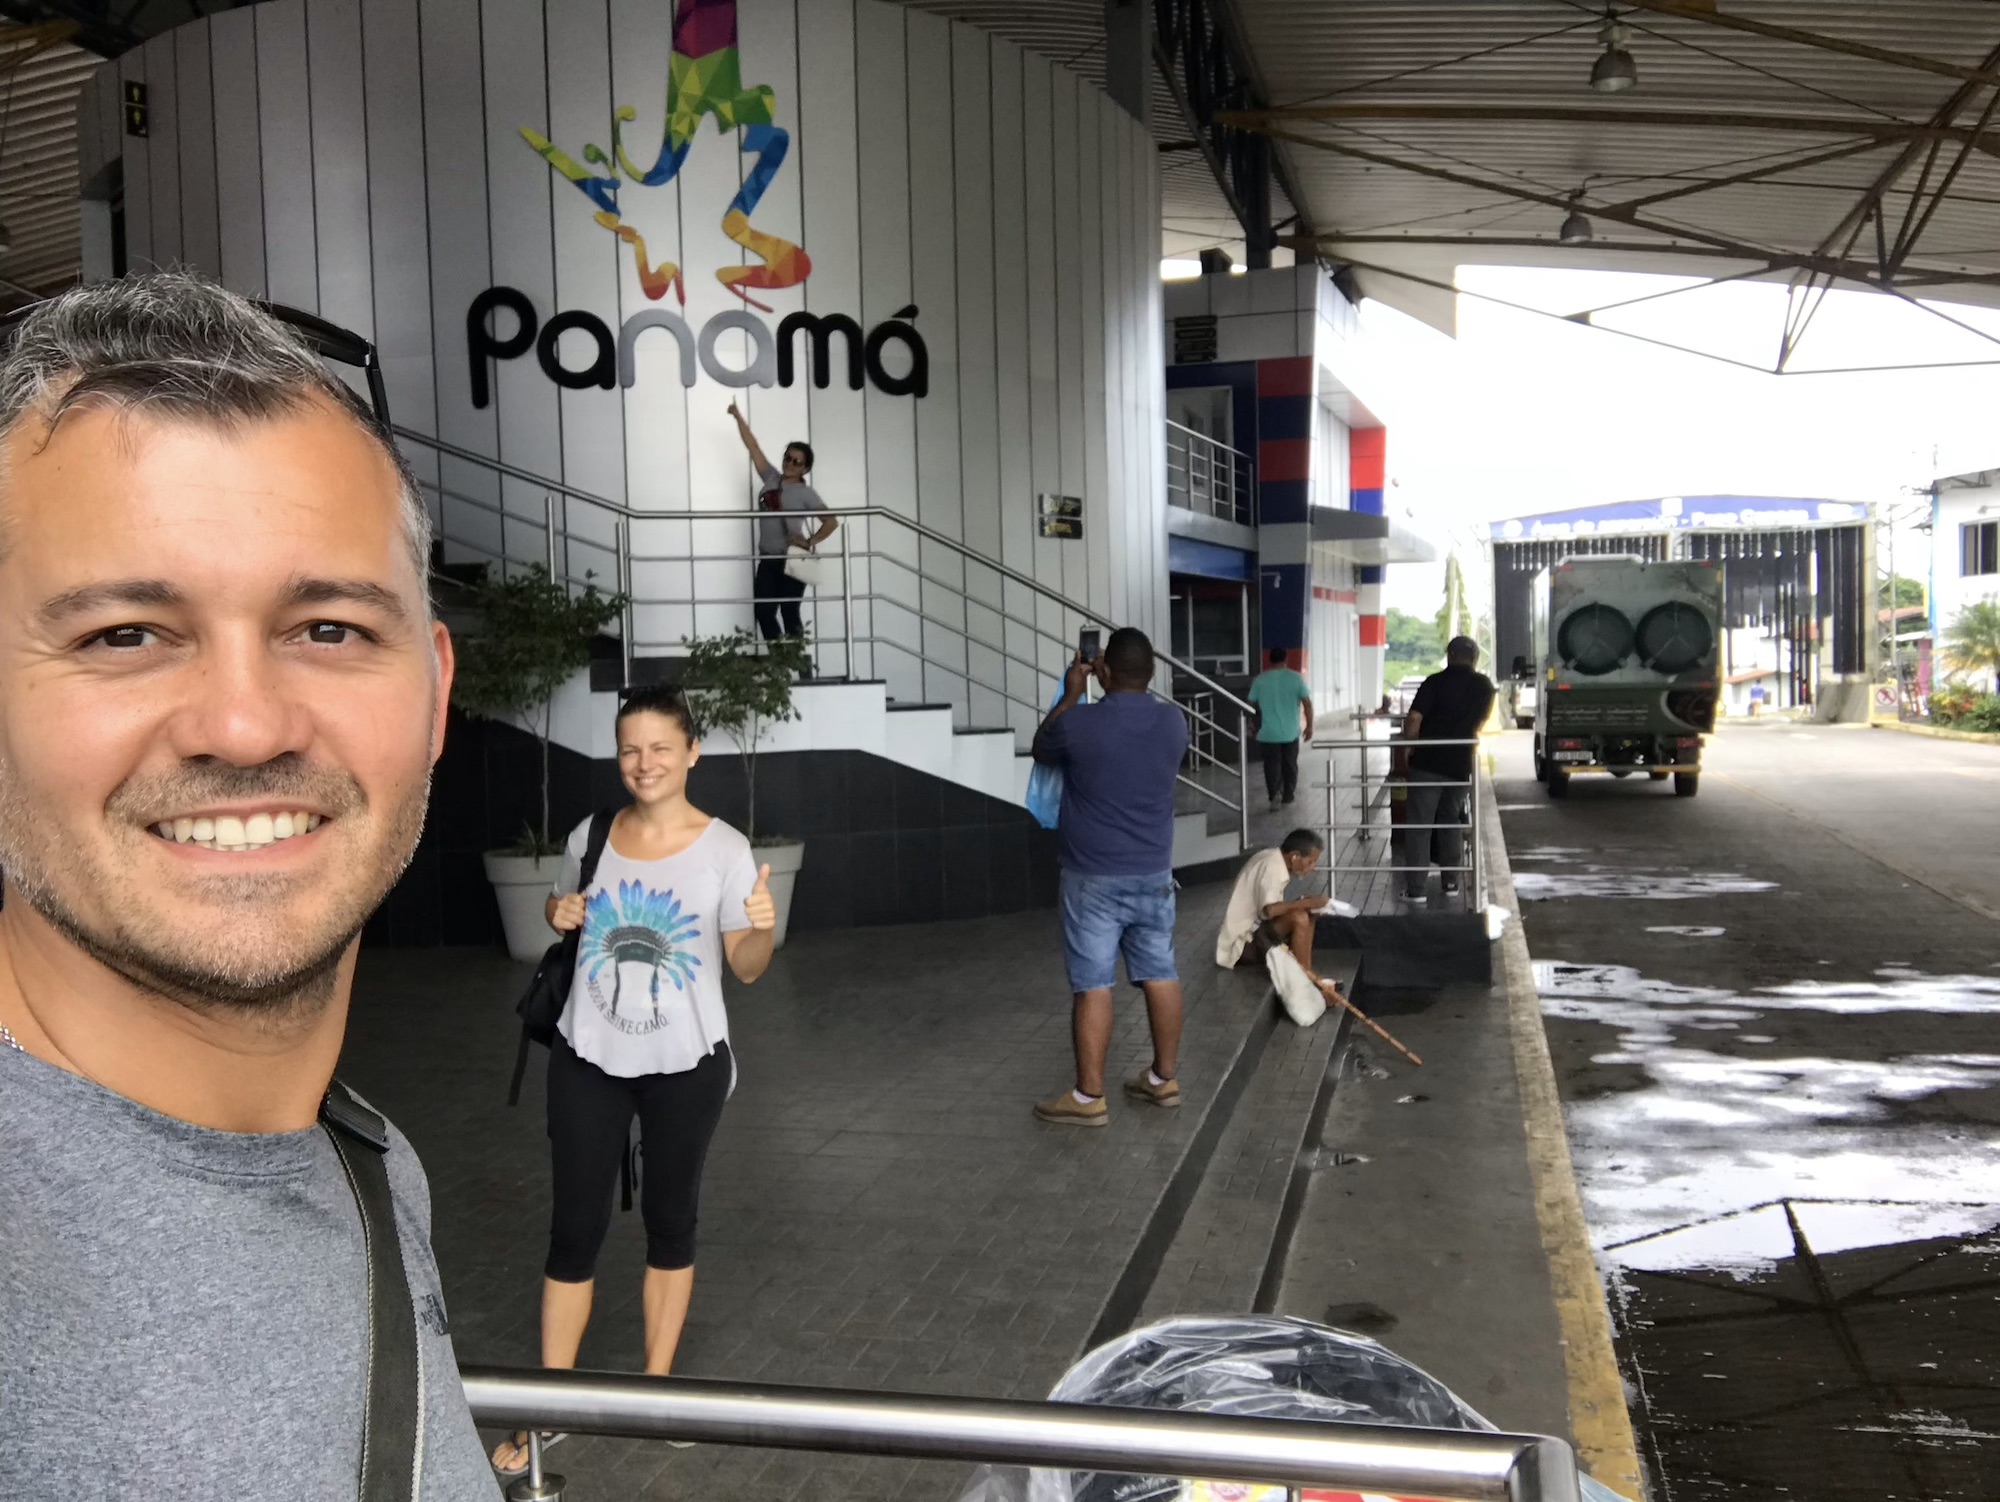 Hello Panama!